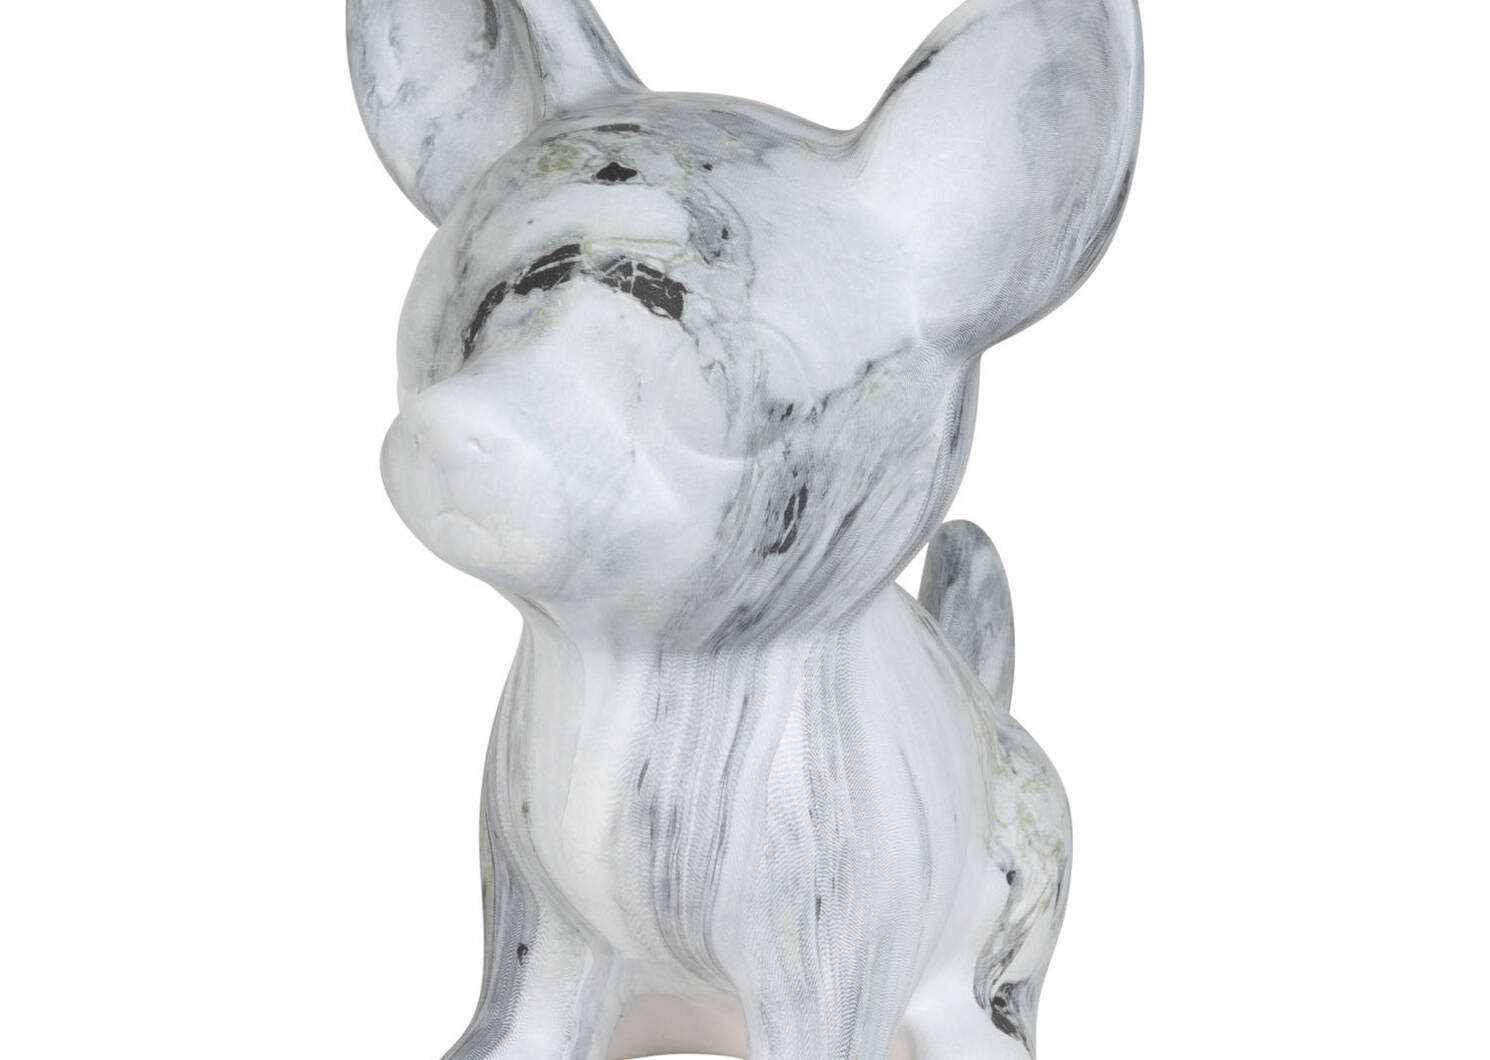 Brutus Dog Statue Marbled